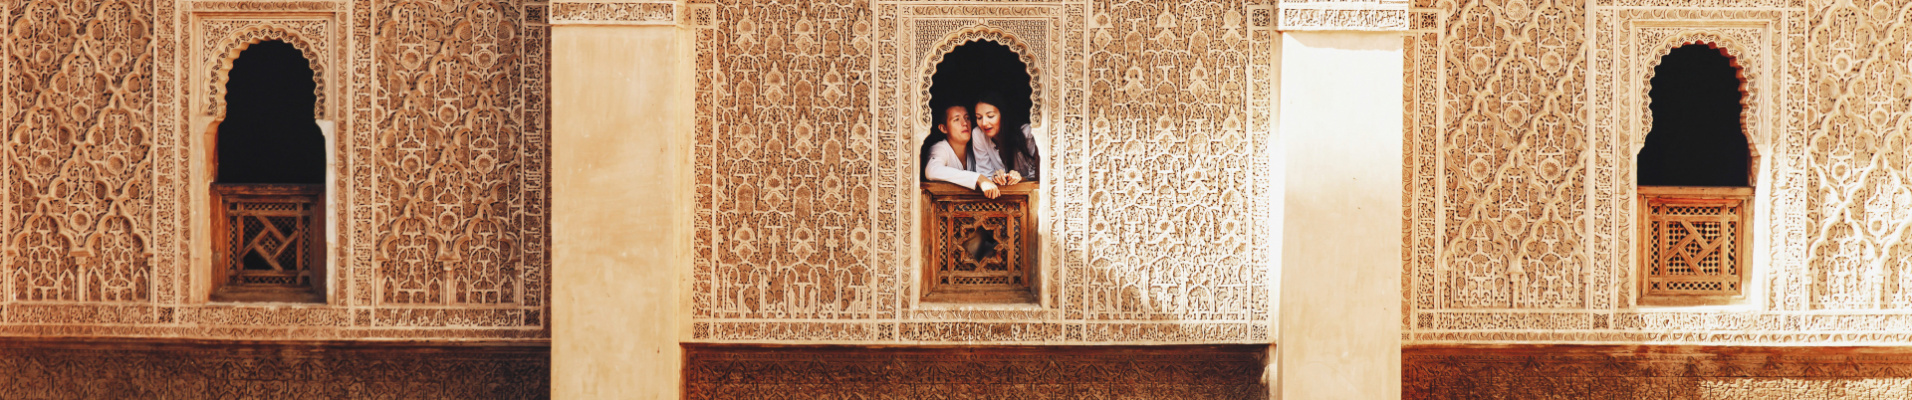 romantic-holidays-morocco